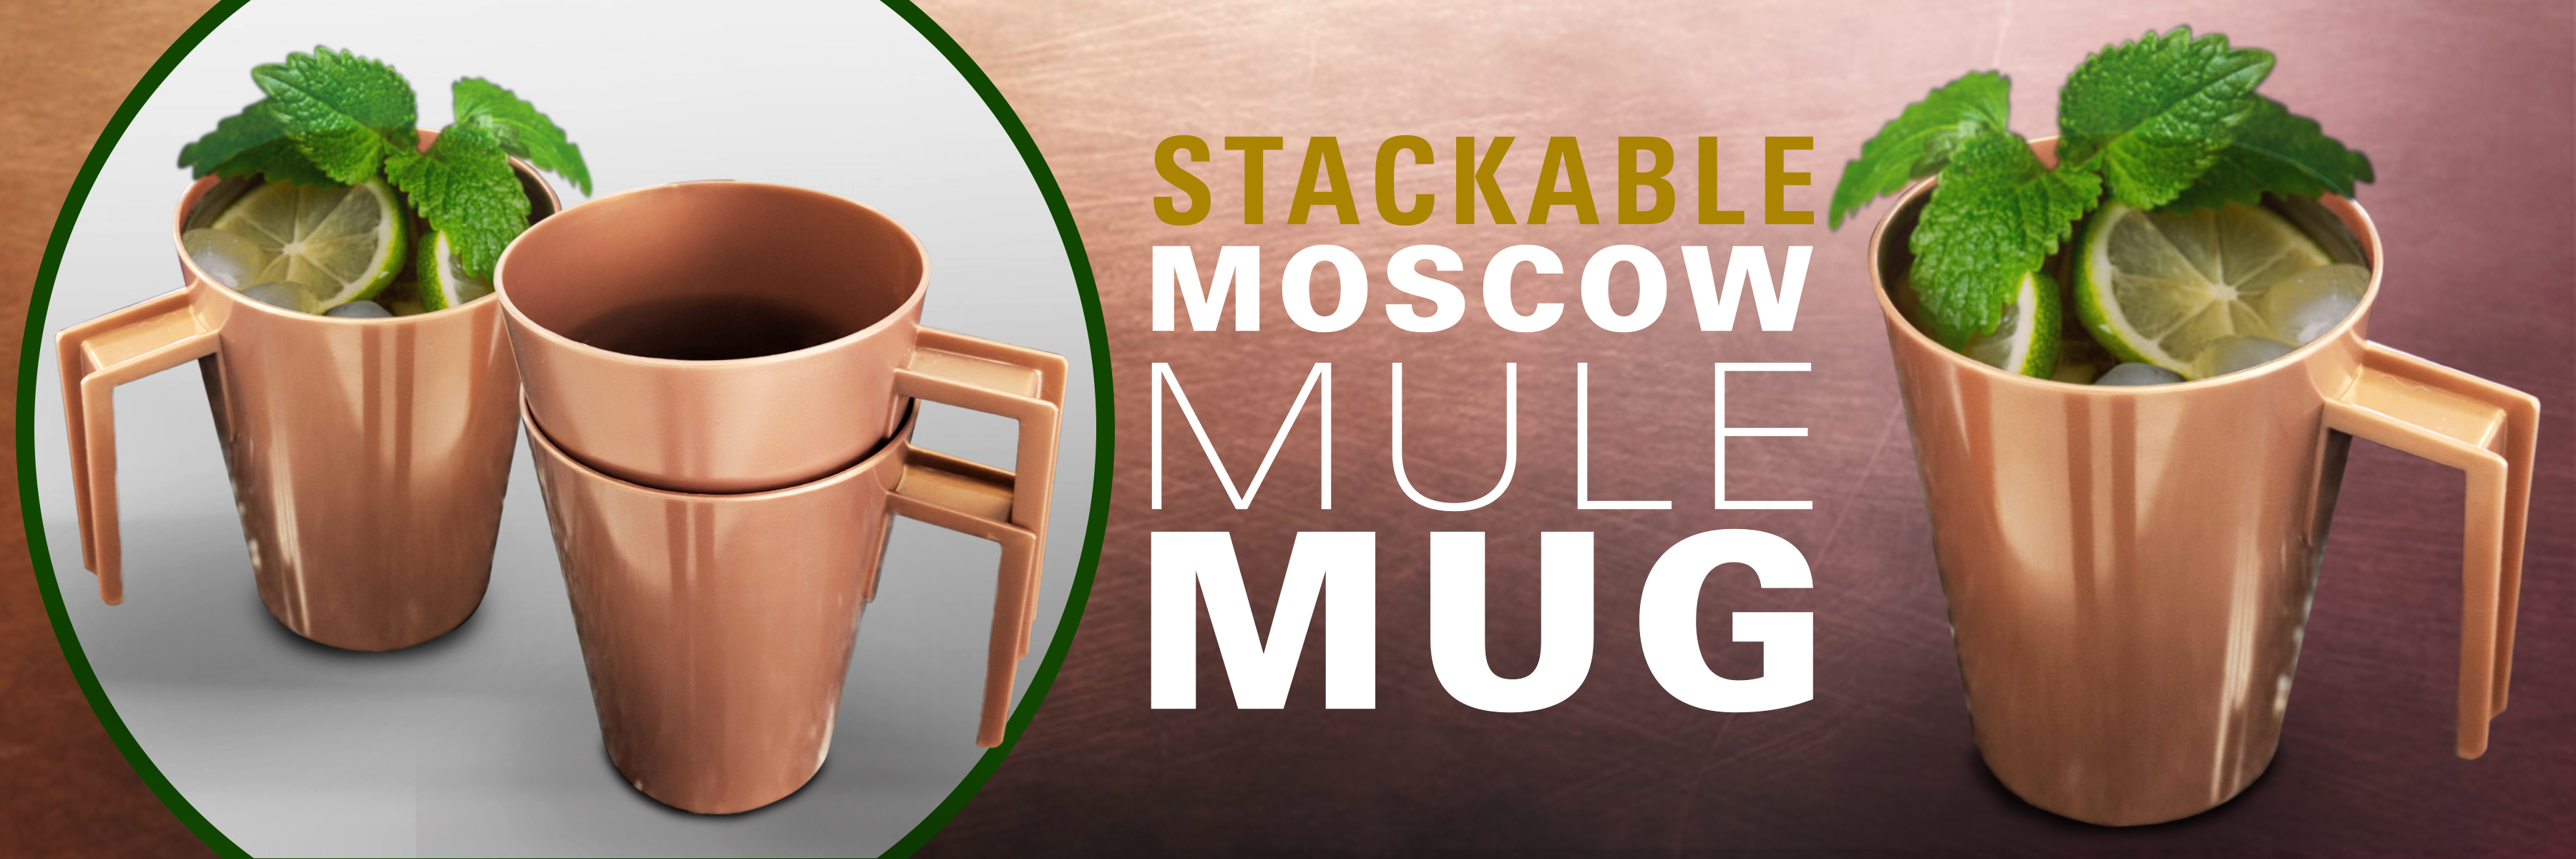 stackable moscow mule mug